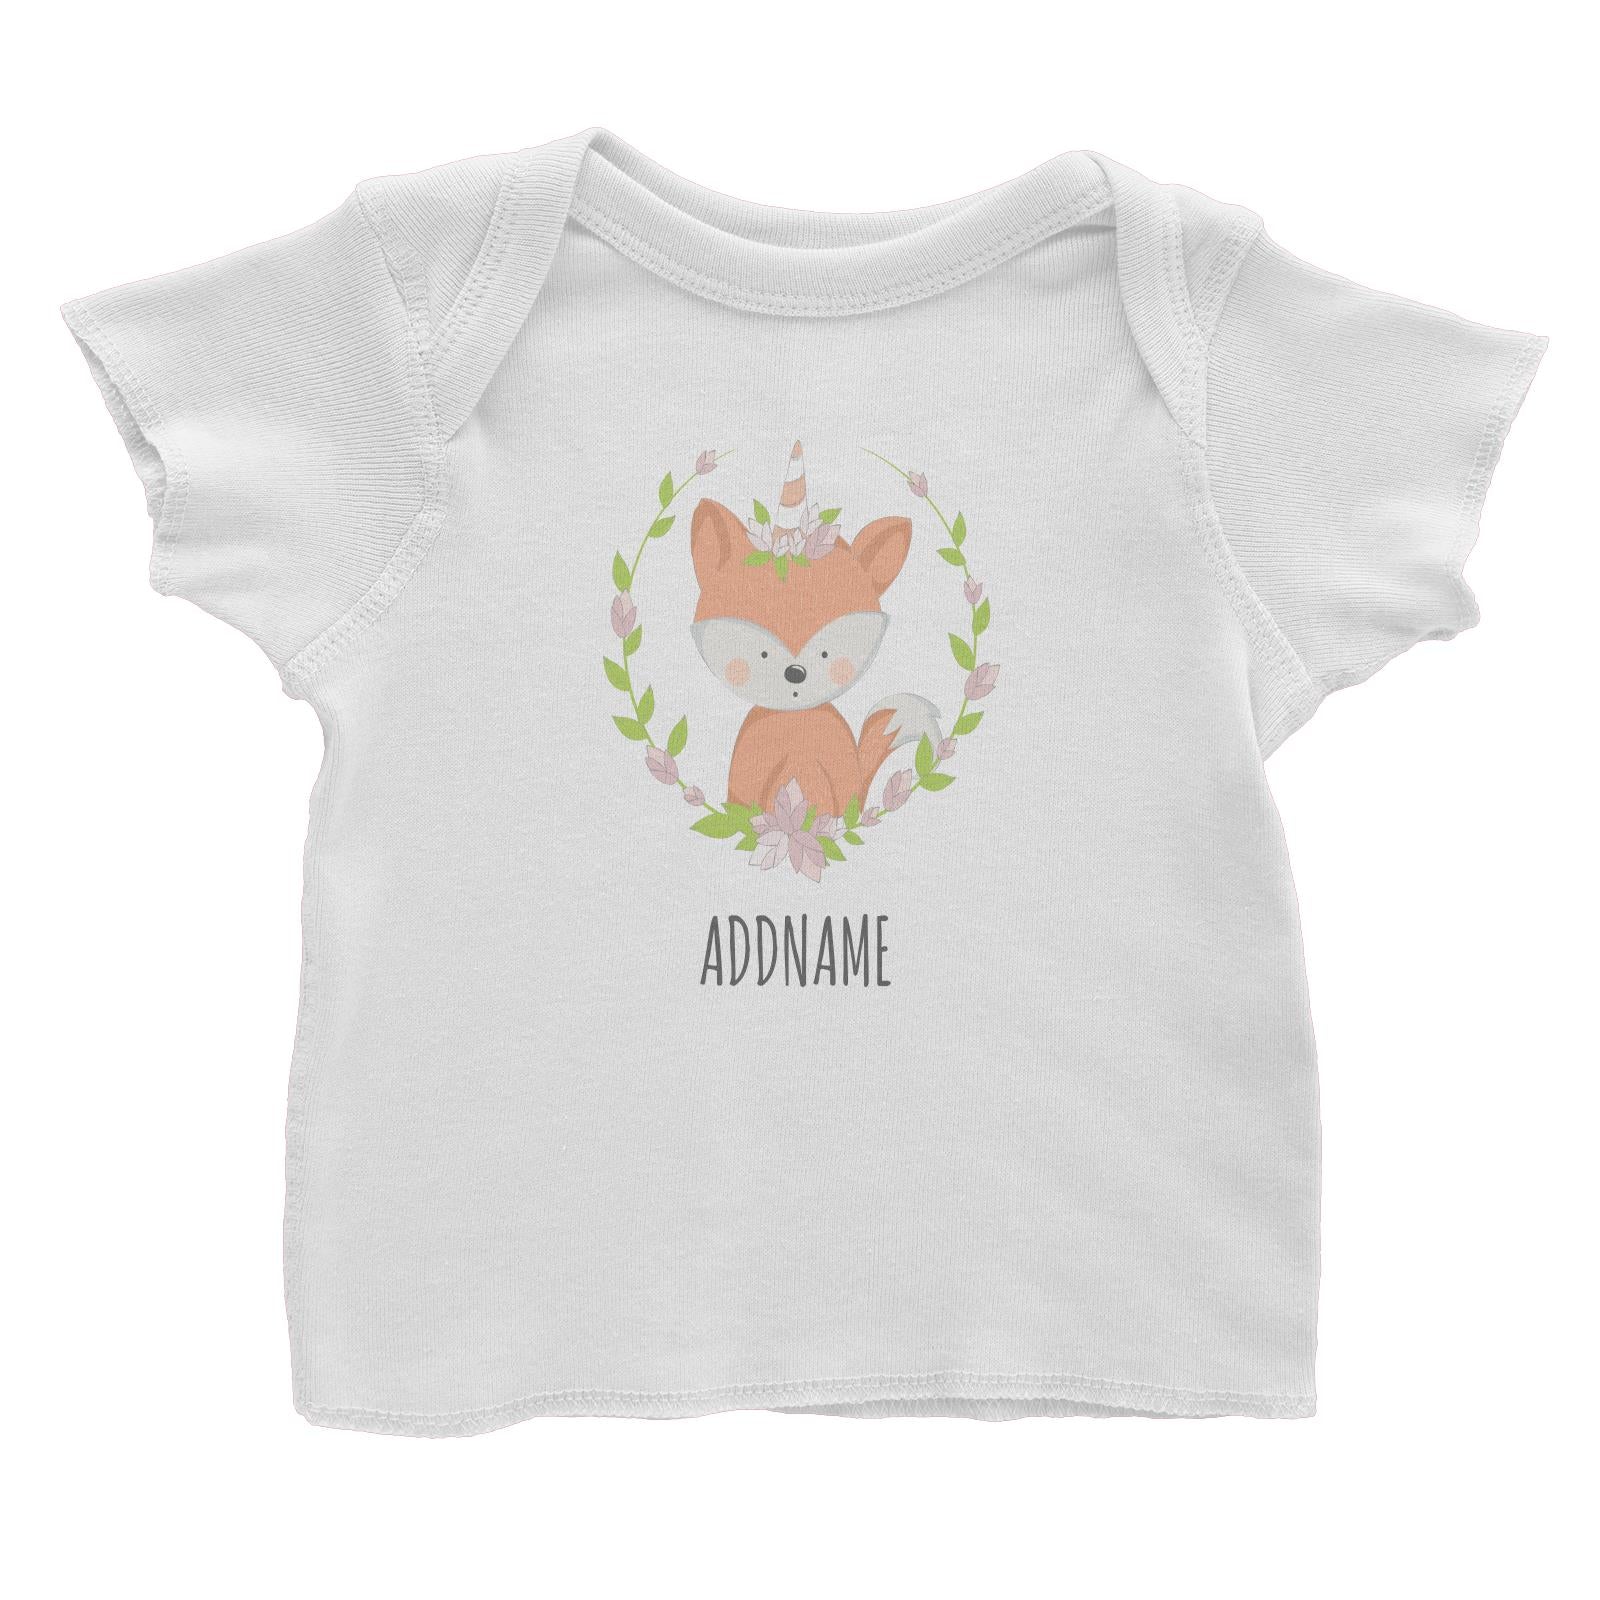 Sweet Wreath Fox Addname Baby T-Shirt